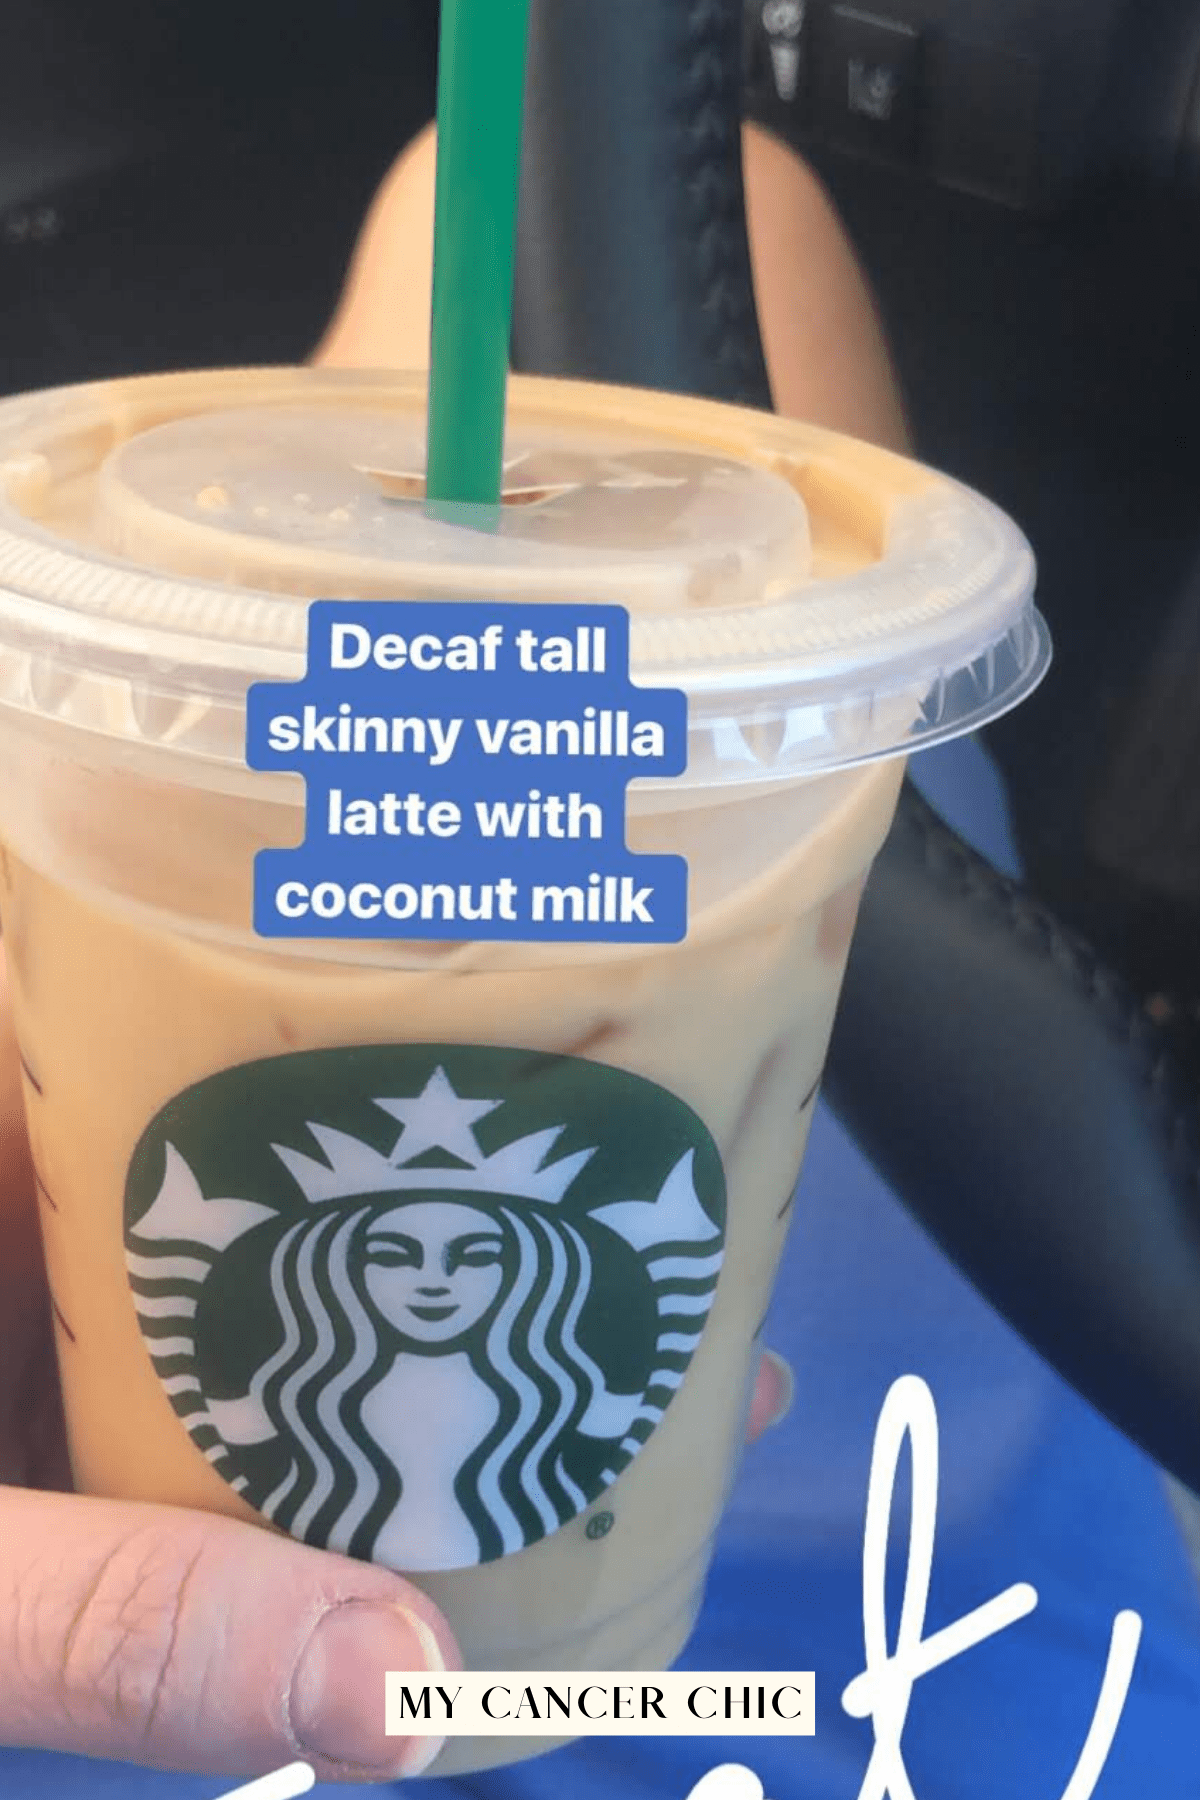 Dairy-free starbucks drink with coconut milk